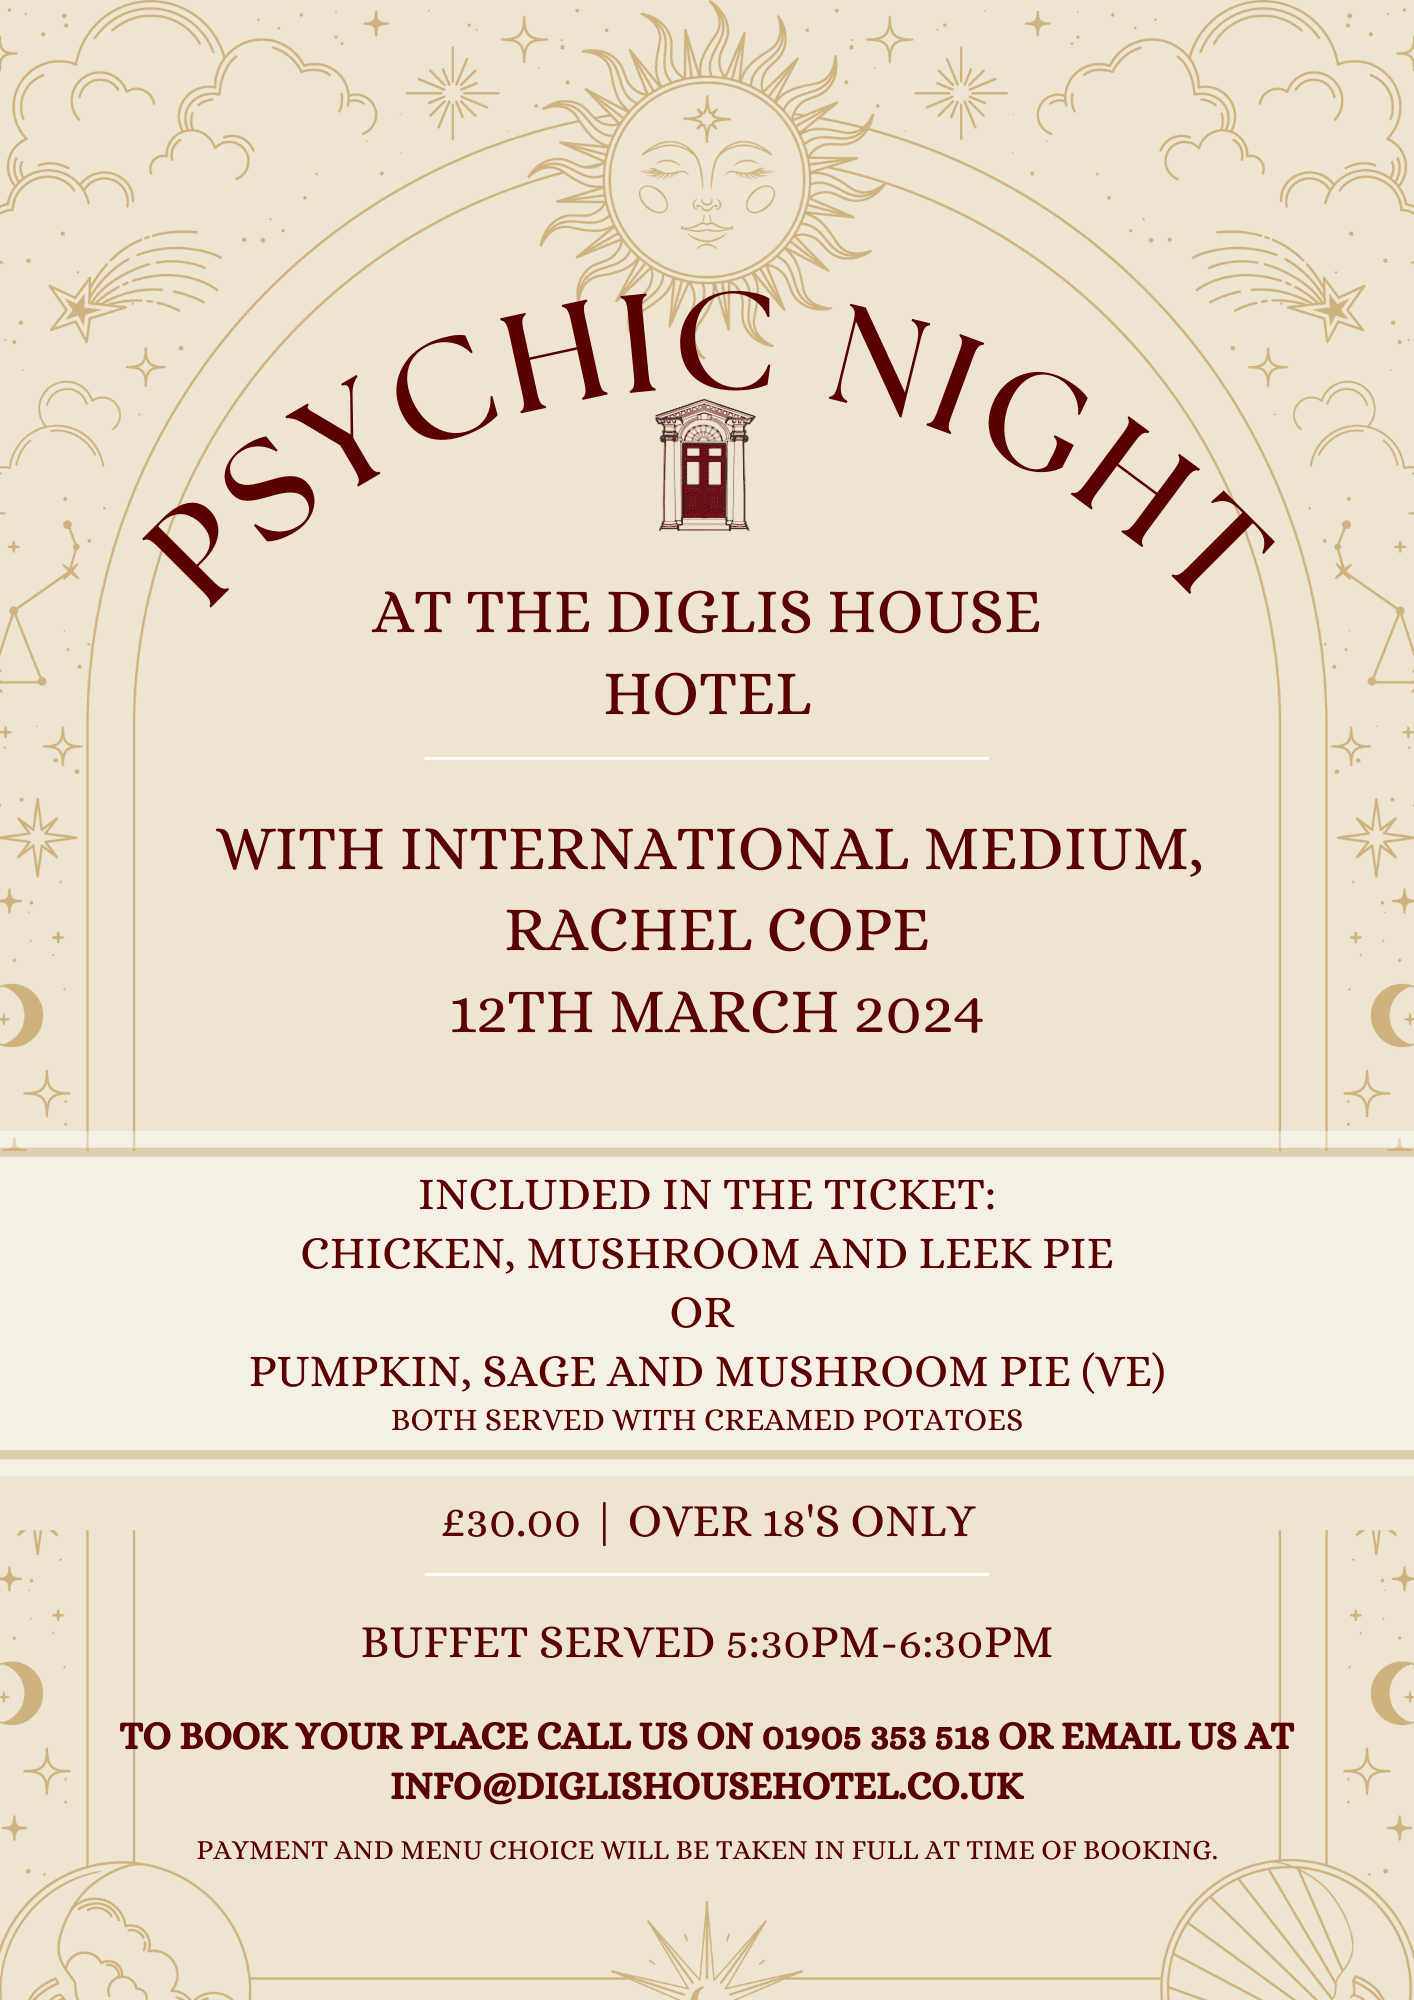 Psychic Night on the 12th March with International Medium, Rachel Cope. 